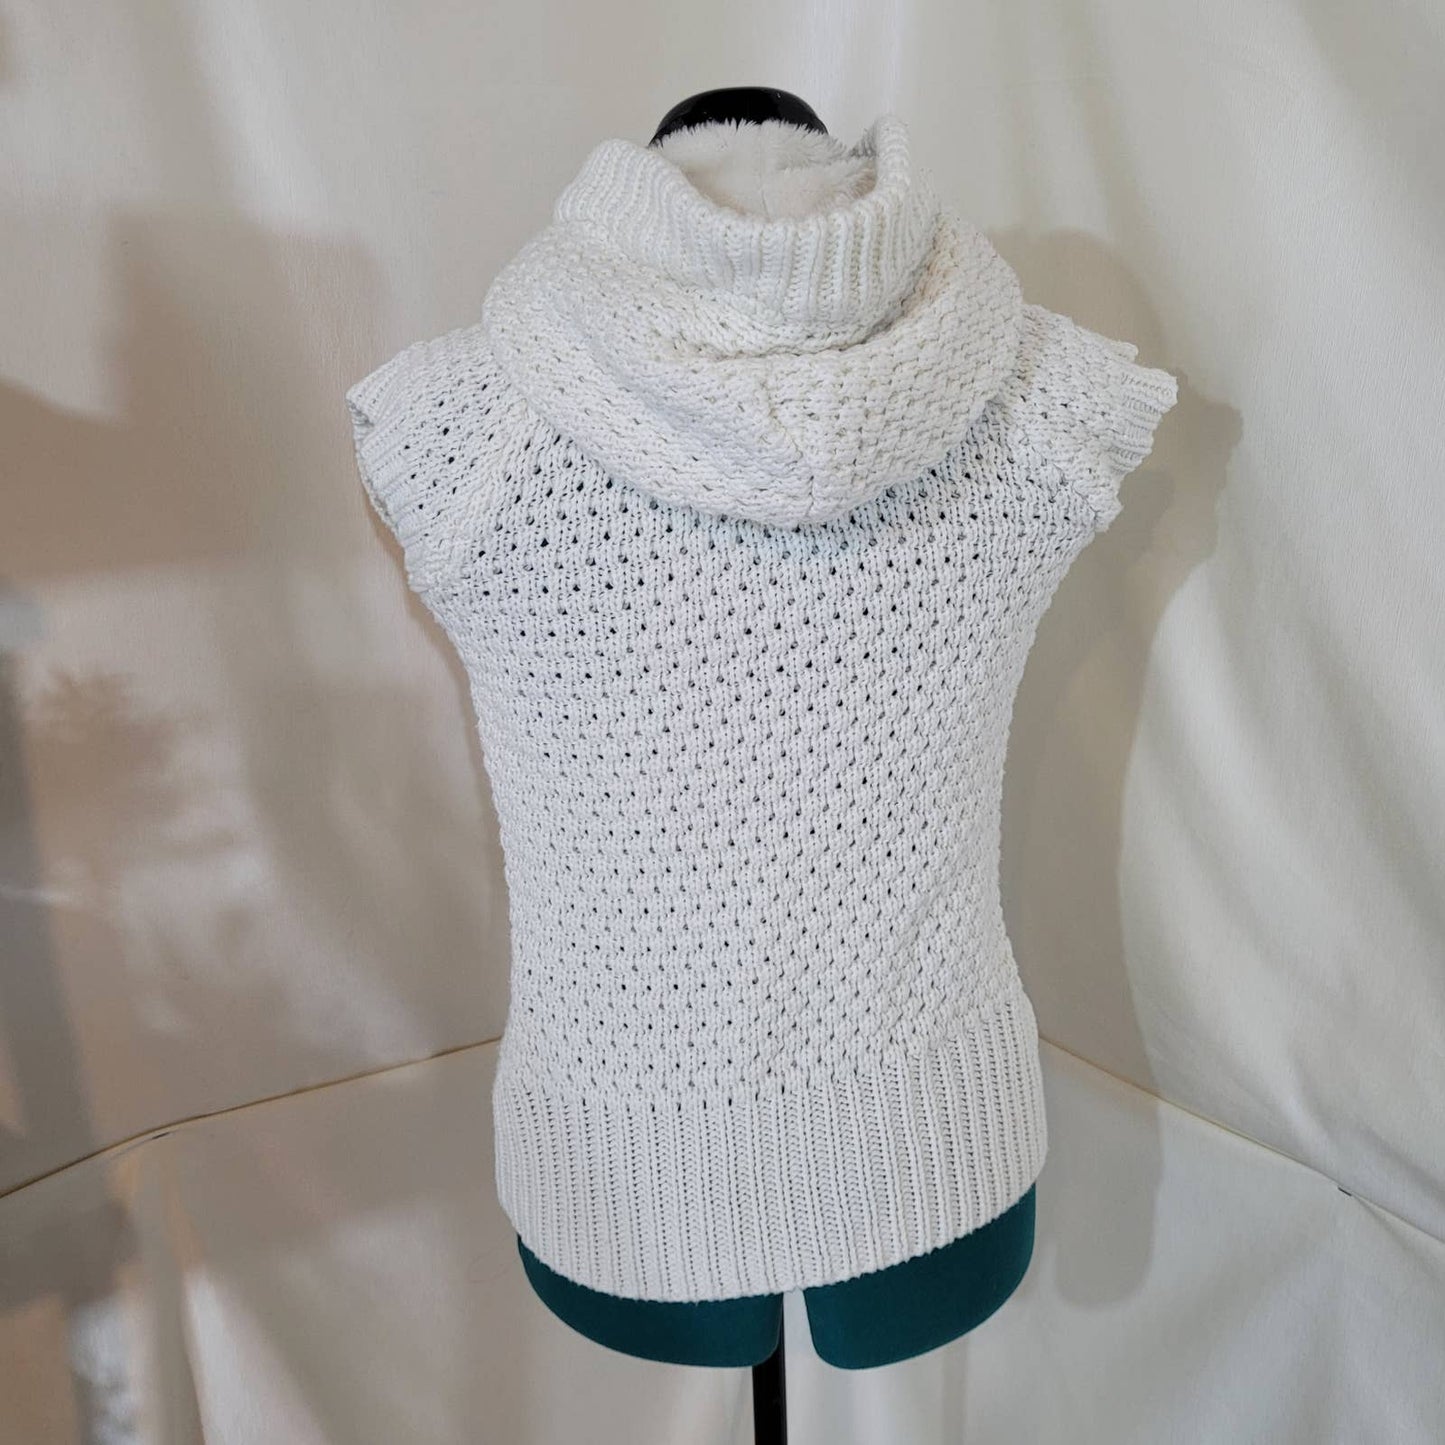 Zara Knitwear Chunky Knit White Sweater - Size Small